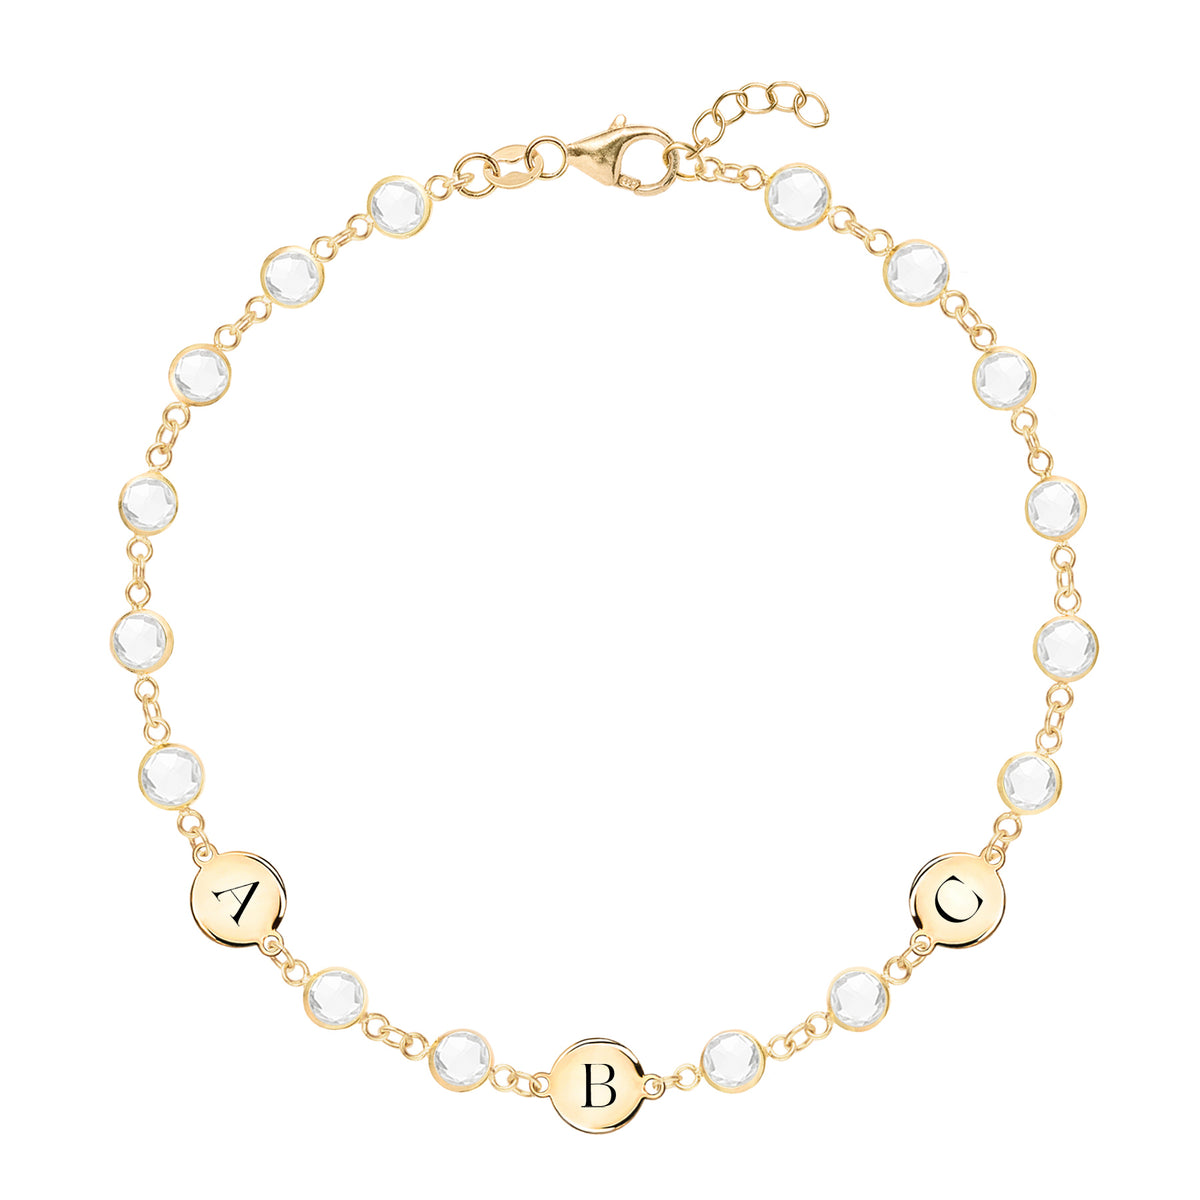 Personalized 3 Letter Bracelet in 14K Gold